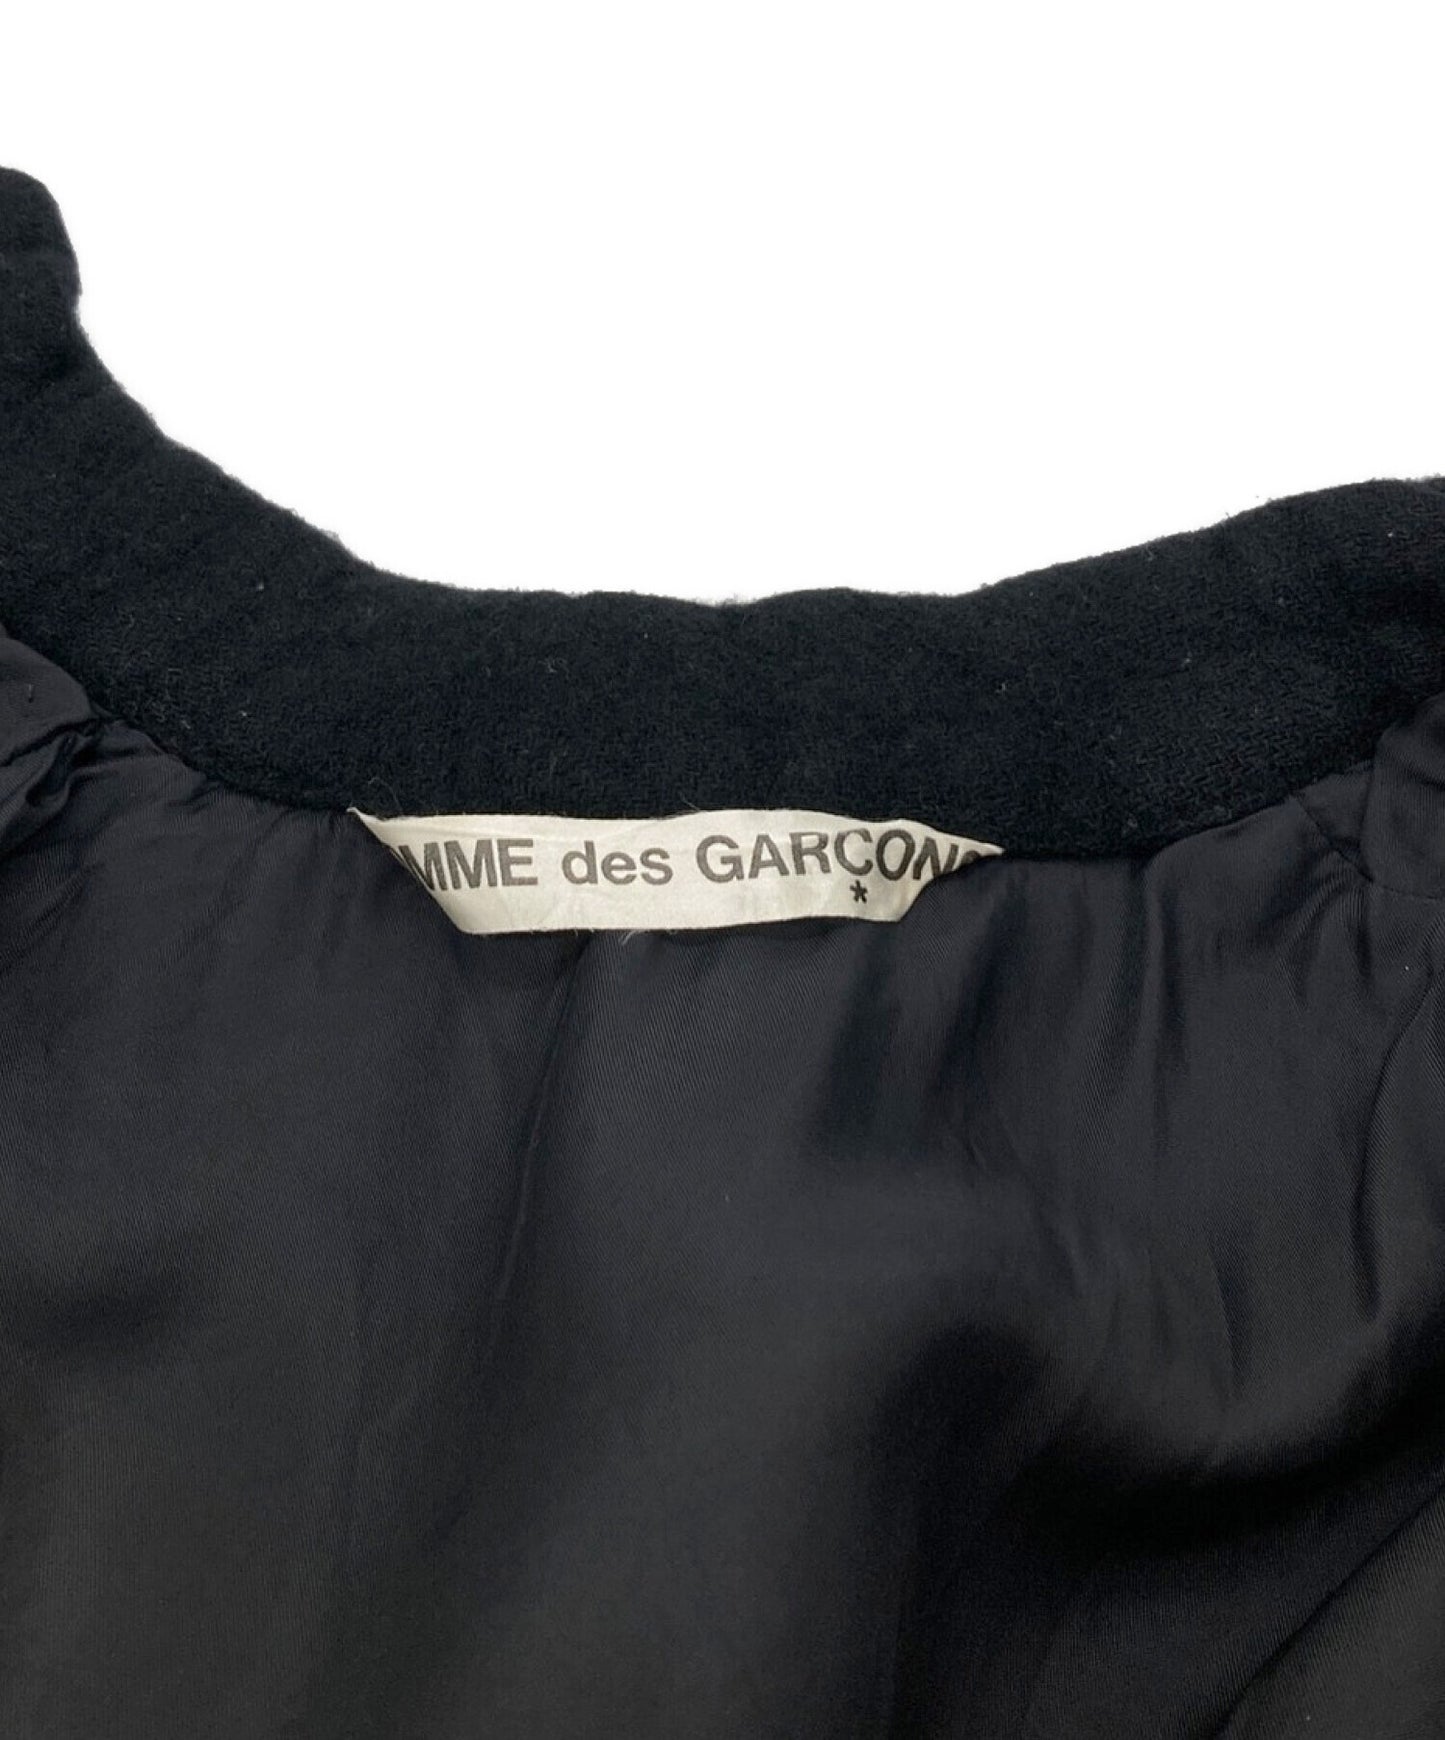 Comme des Garcons 1994aw metamorphosis 기간 아카이브 짧은 길이 디자인 재킷 GB-040420